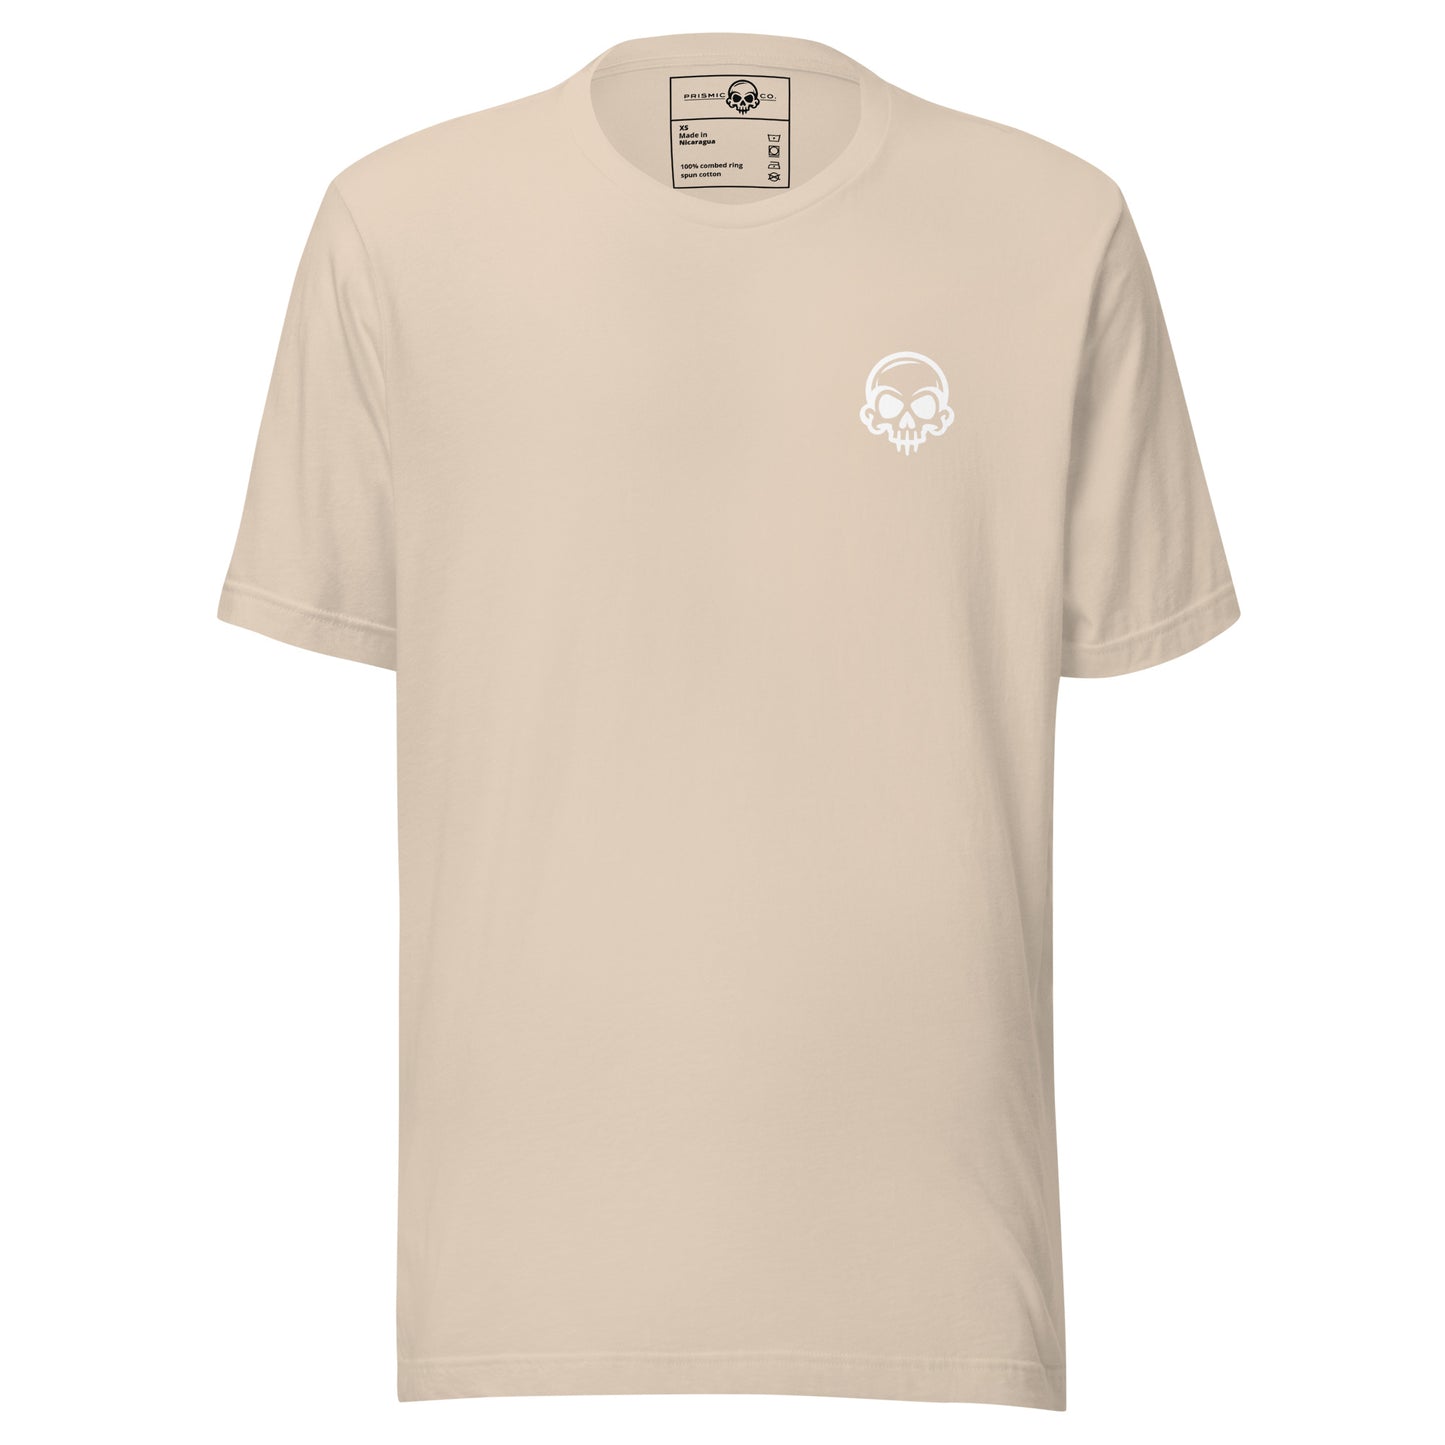 Prismic Co. White Logo T-Shirt